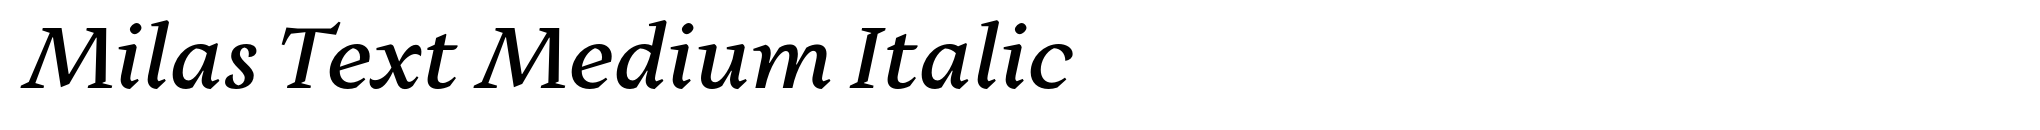 Milas Text Medium Italic image